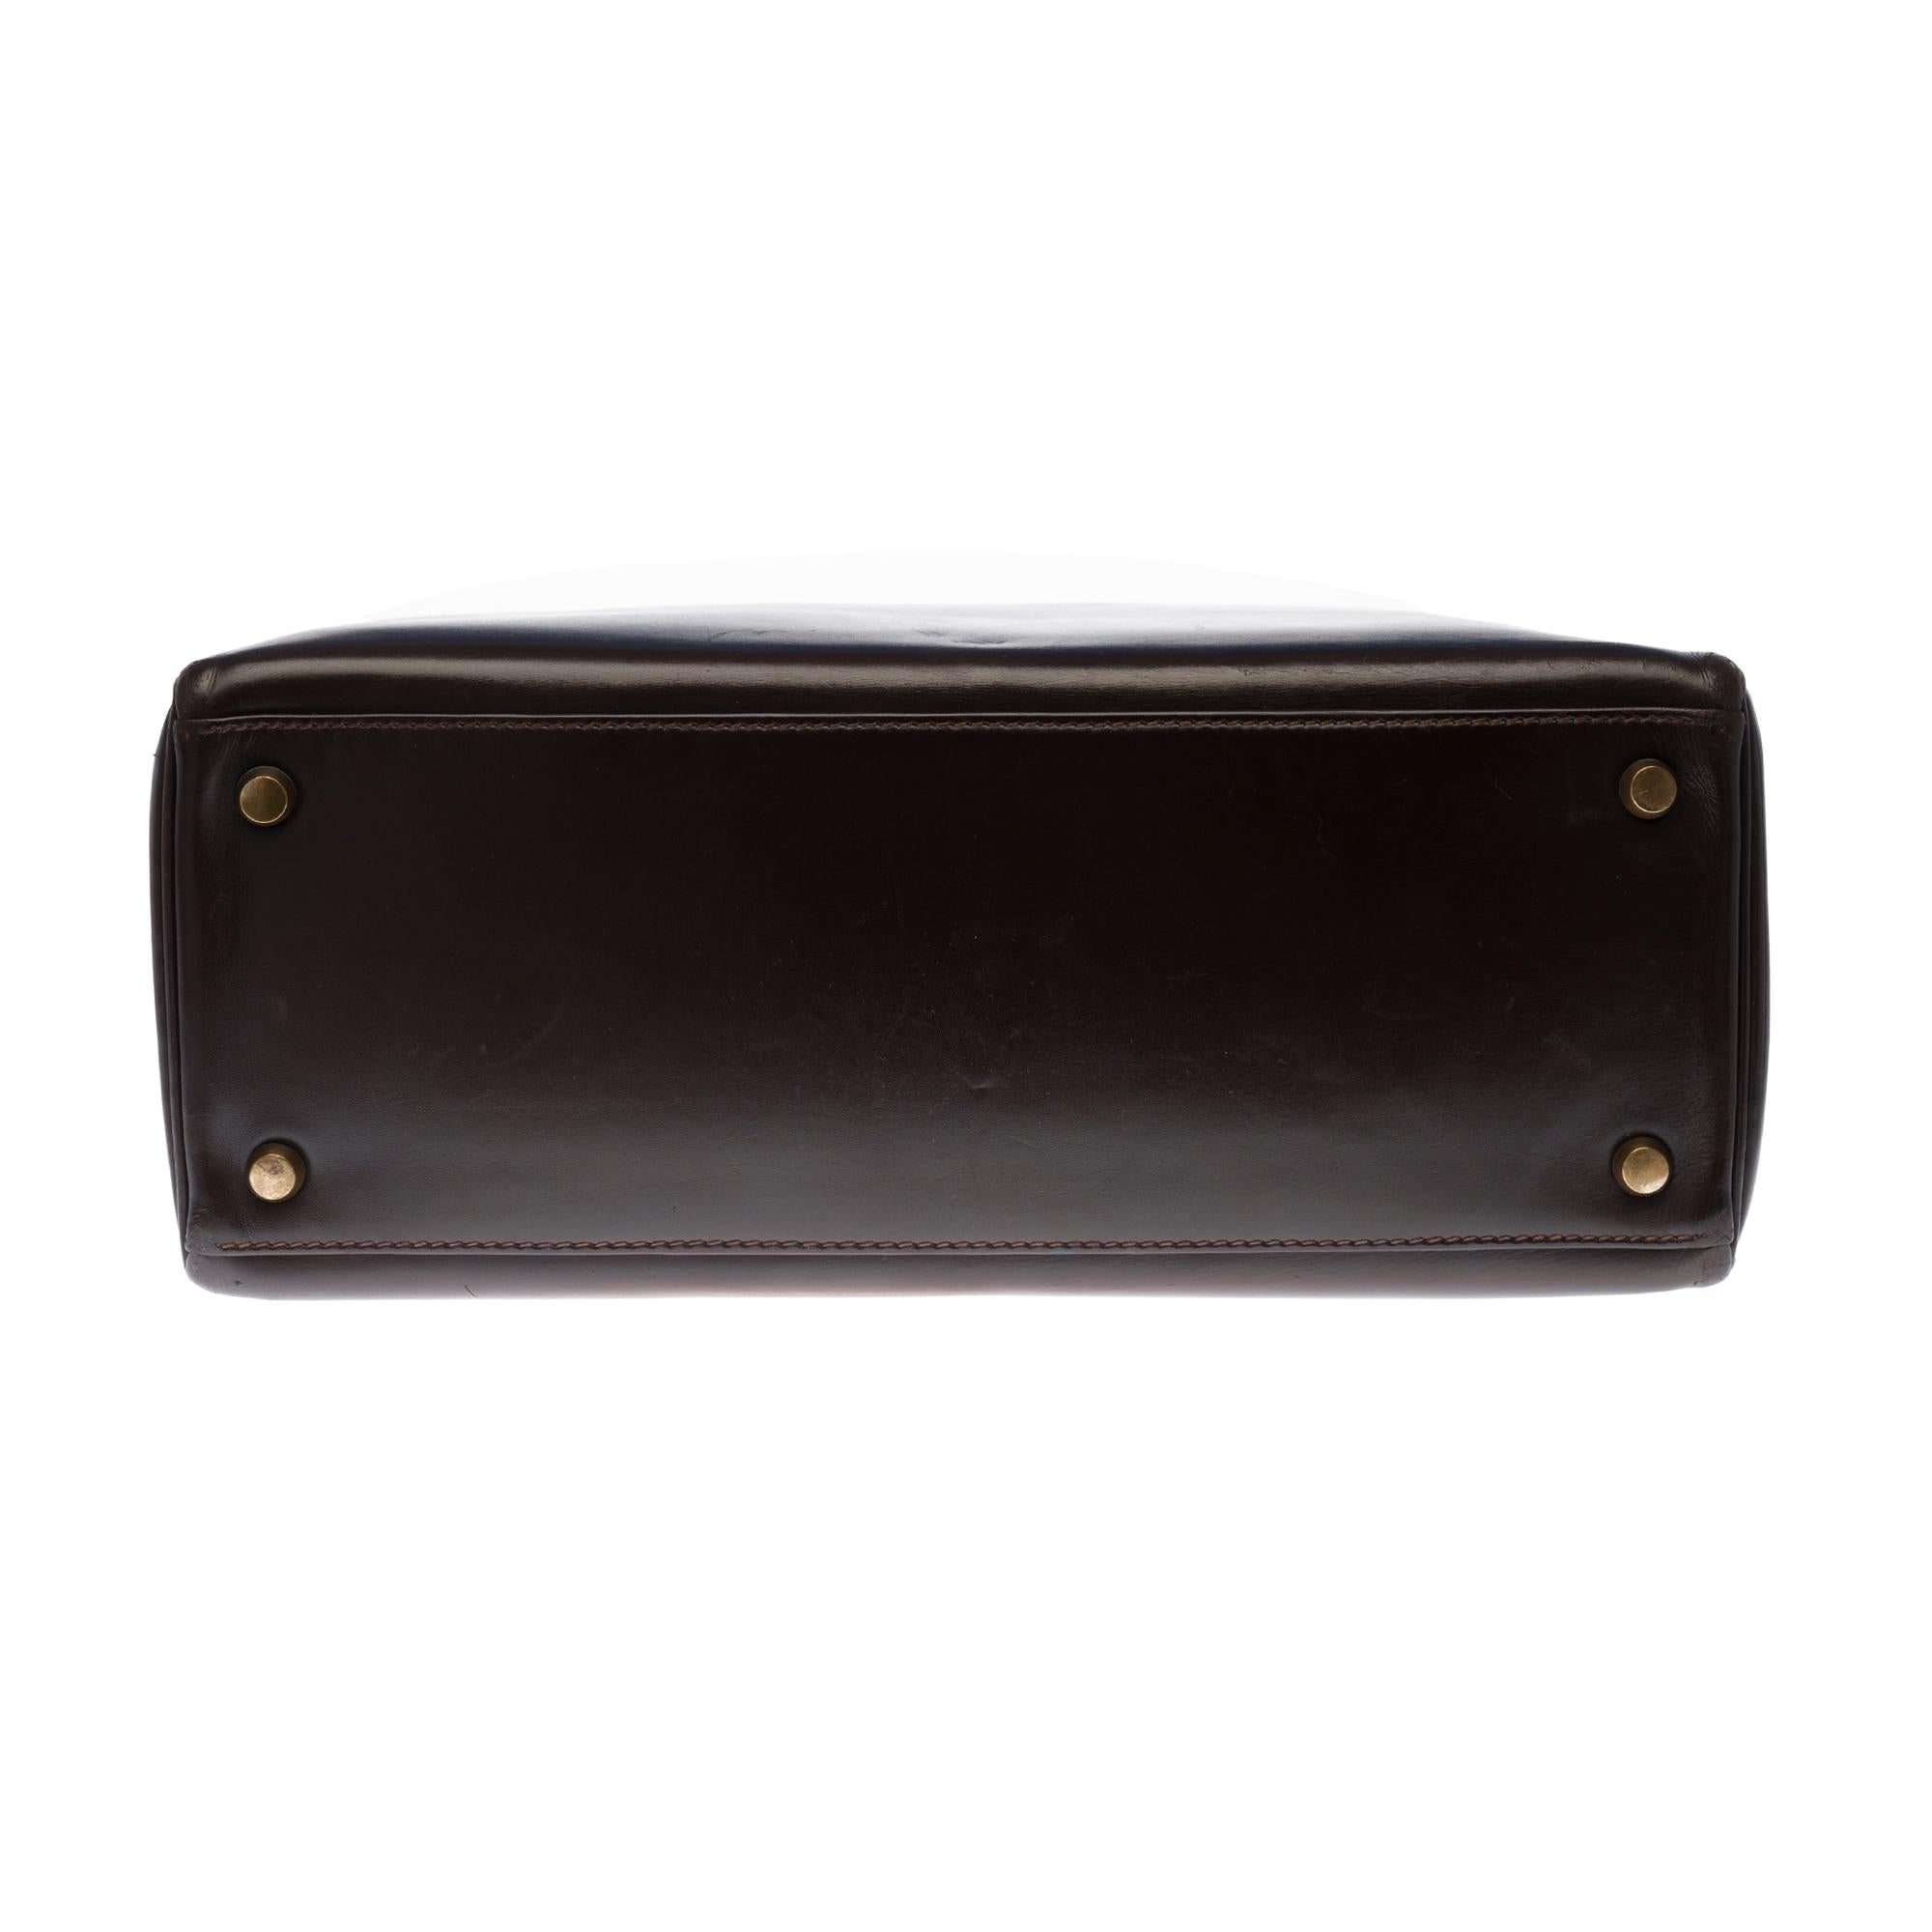 RARE Hermès Kelly Monaco 30cm handbag in brown box calfskin with Gold hardware 1